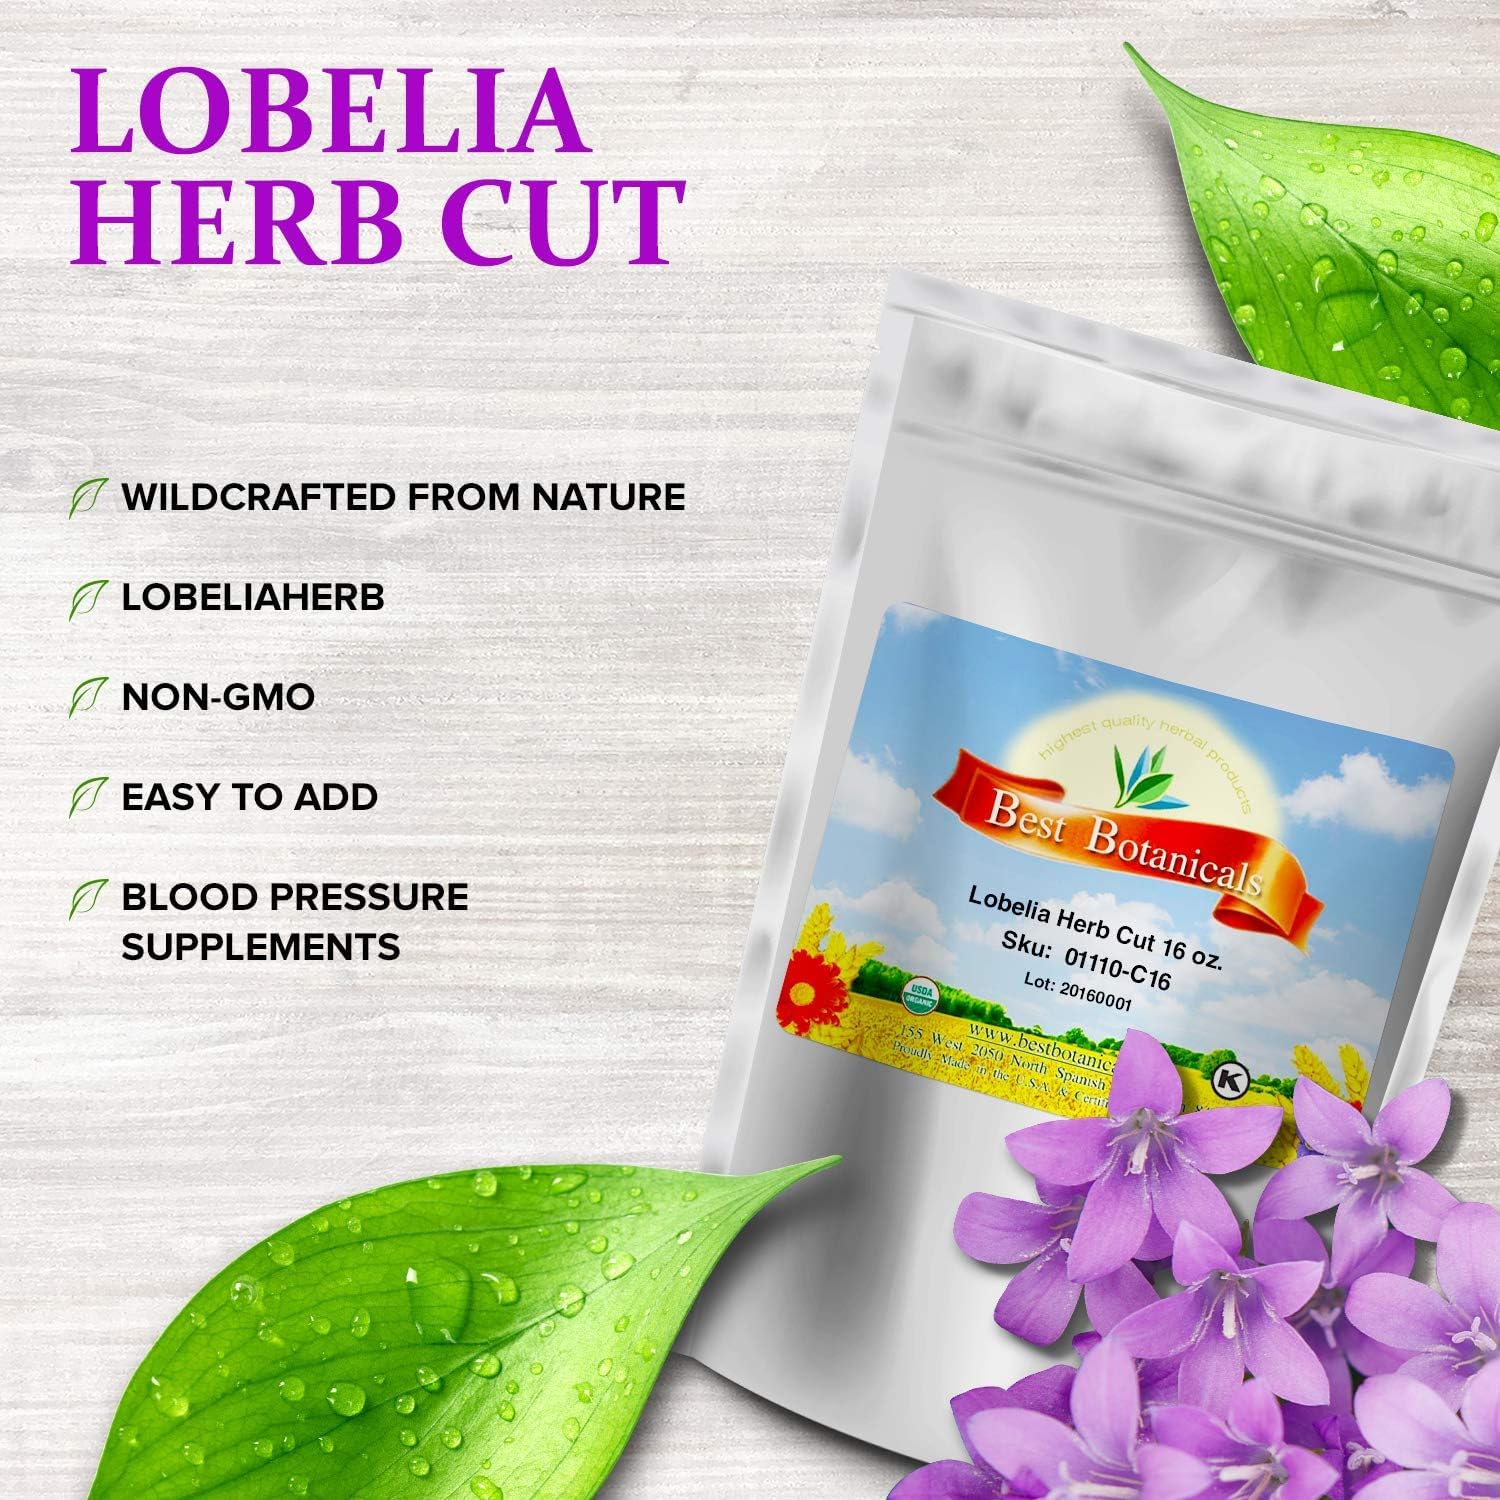 Best Botanicals Lobelia Herb Cut 16 oz.